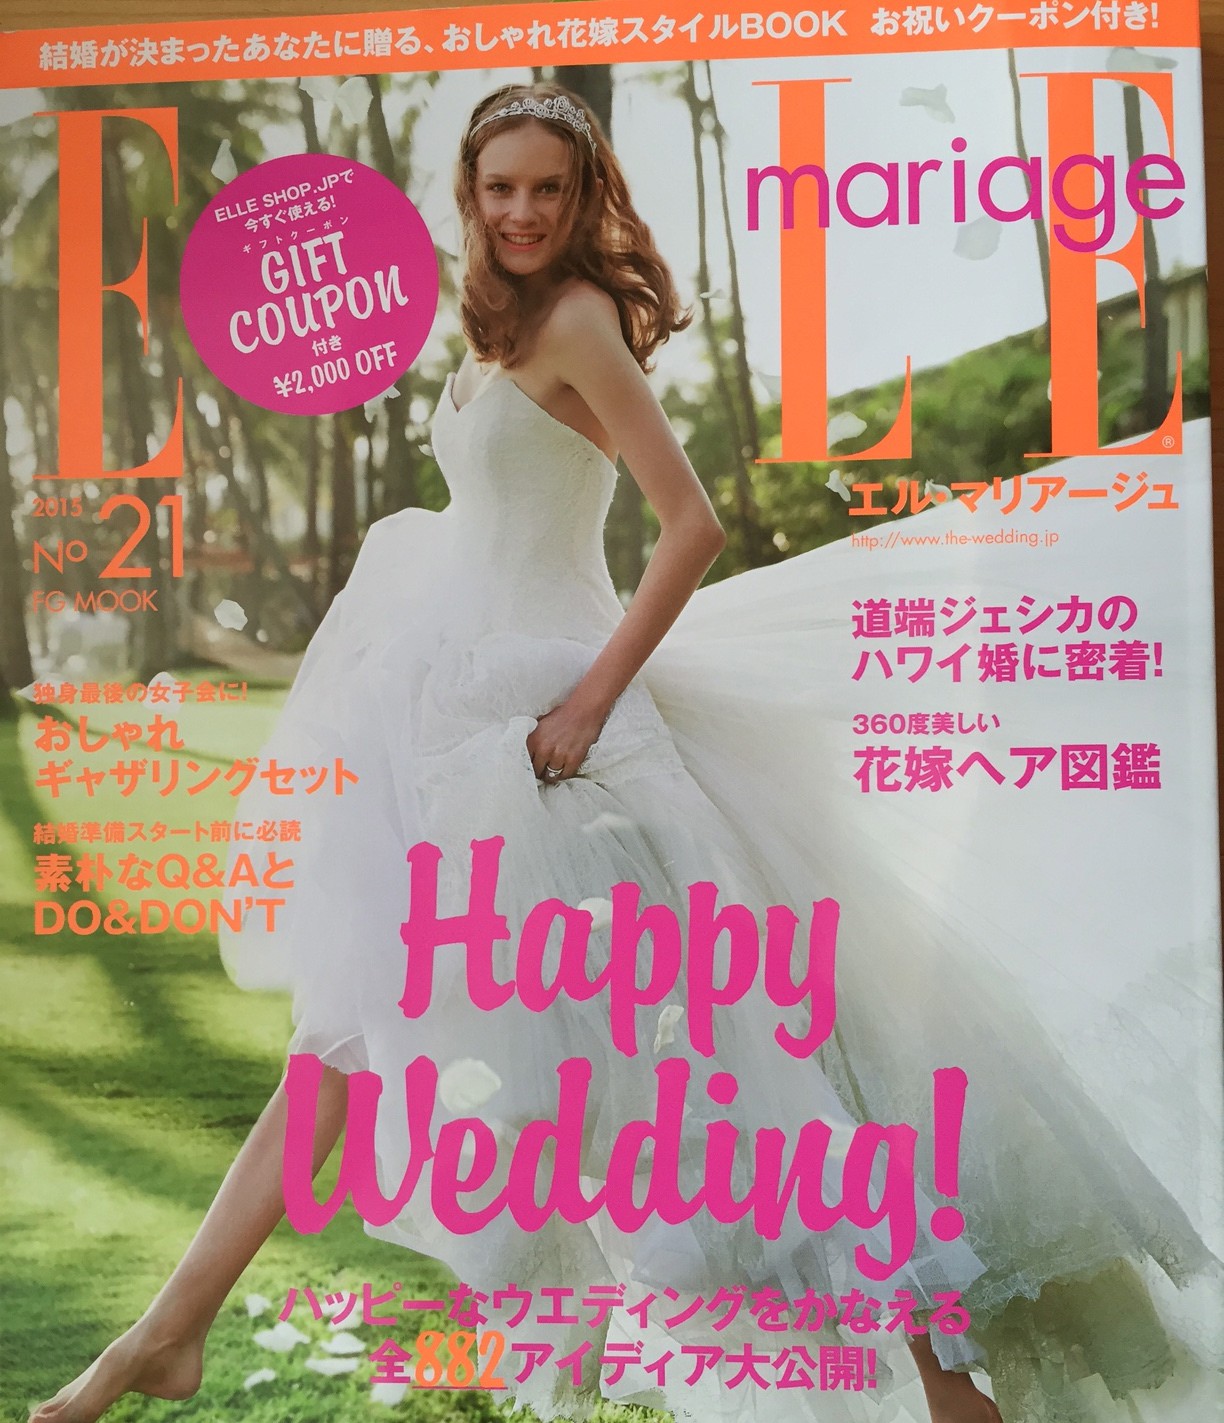 ELLE mariage 2015 No.21 3/20発売号掲載 | ウェディングドレスはLOVE ...